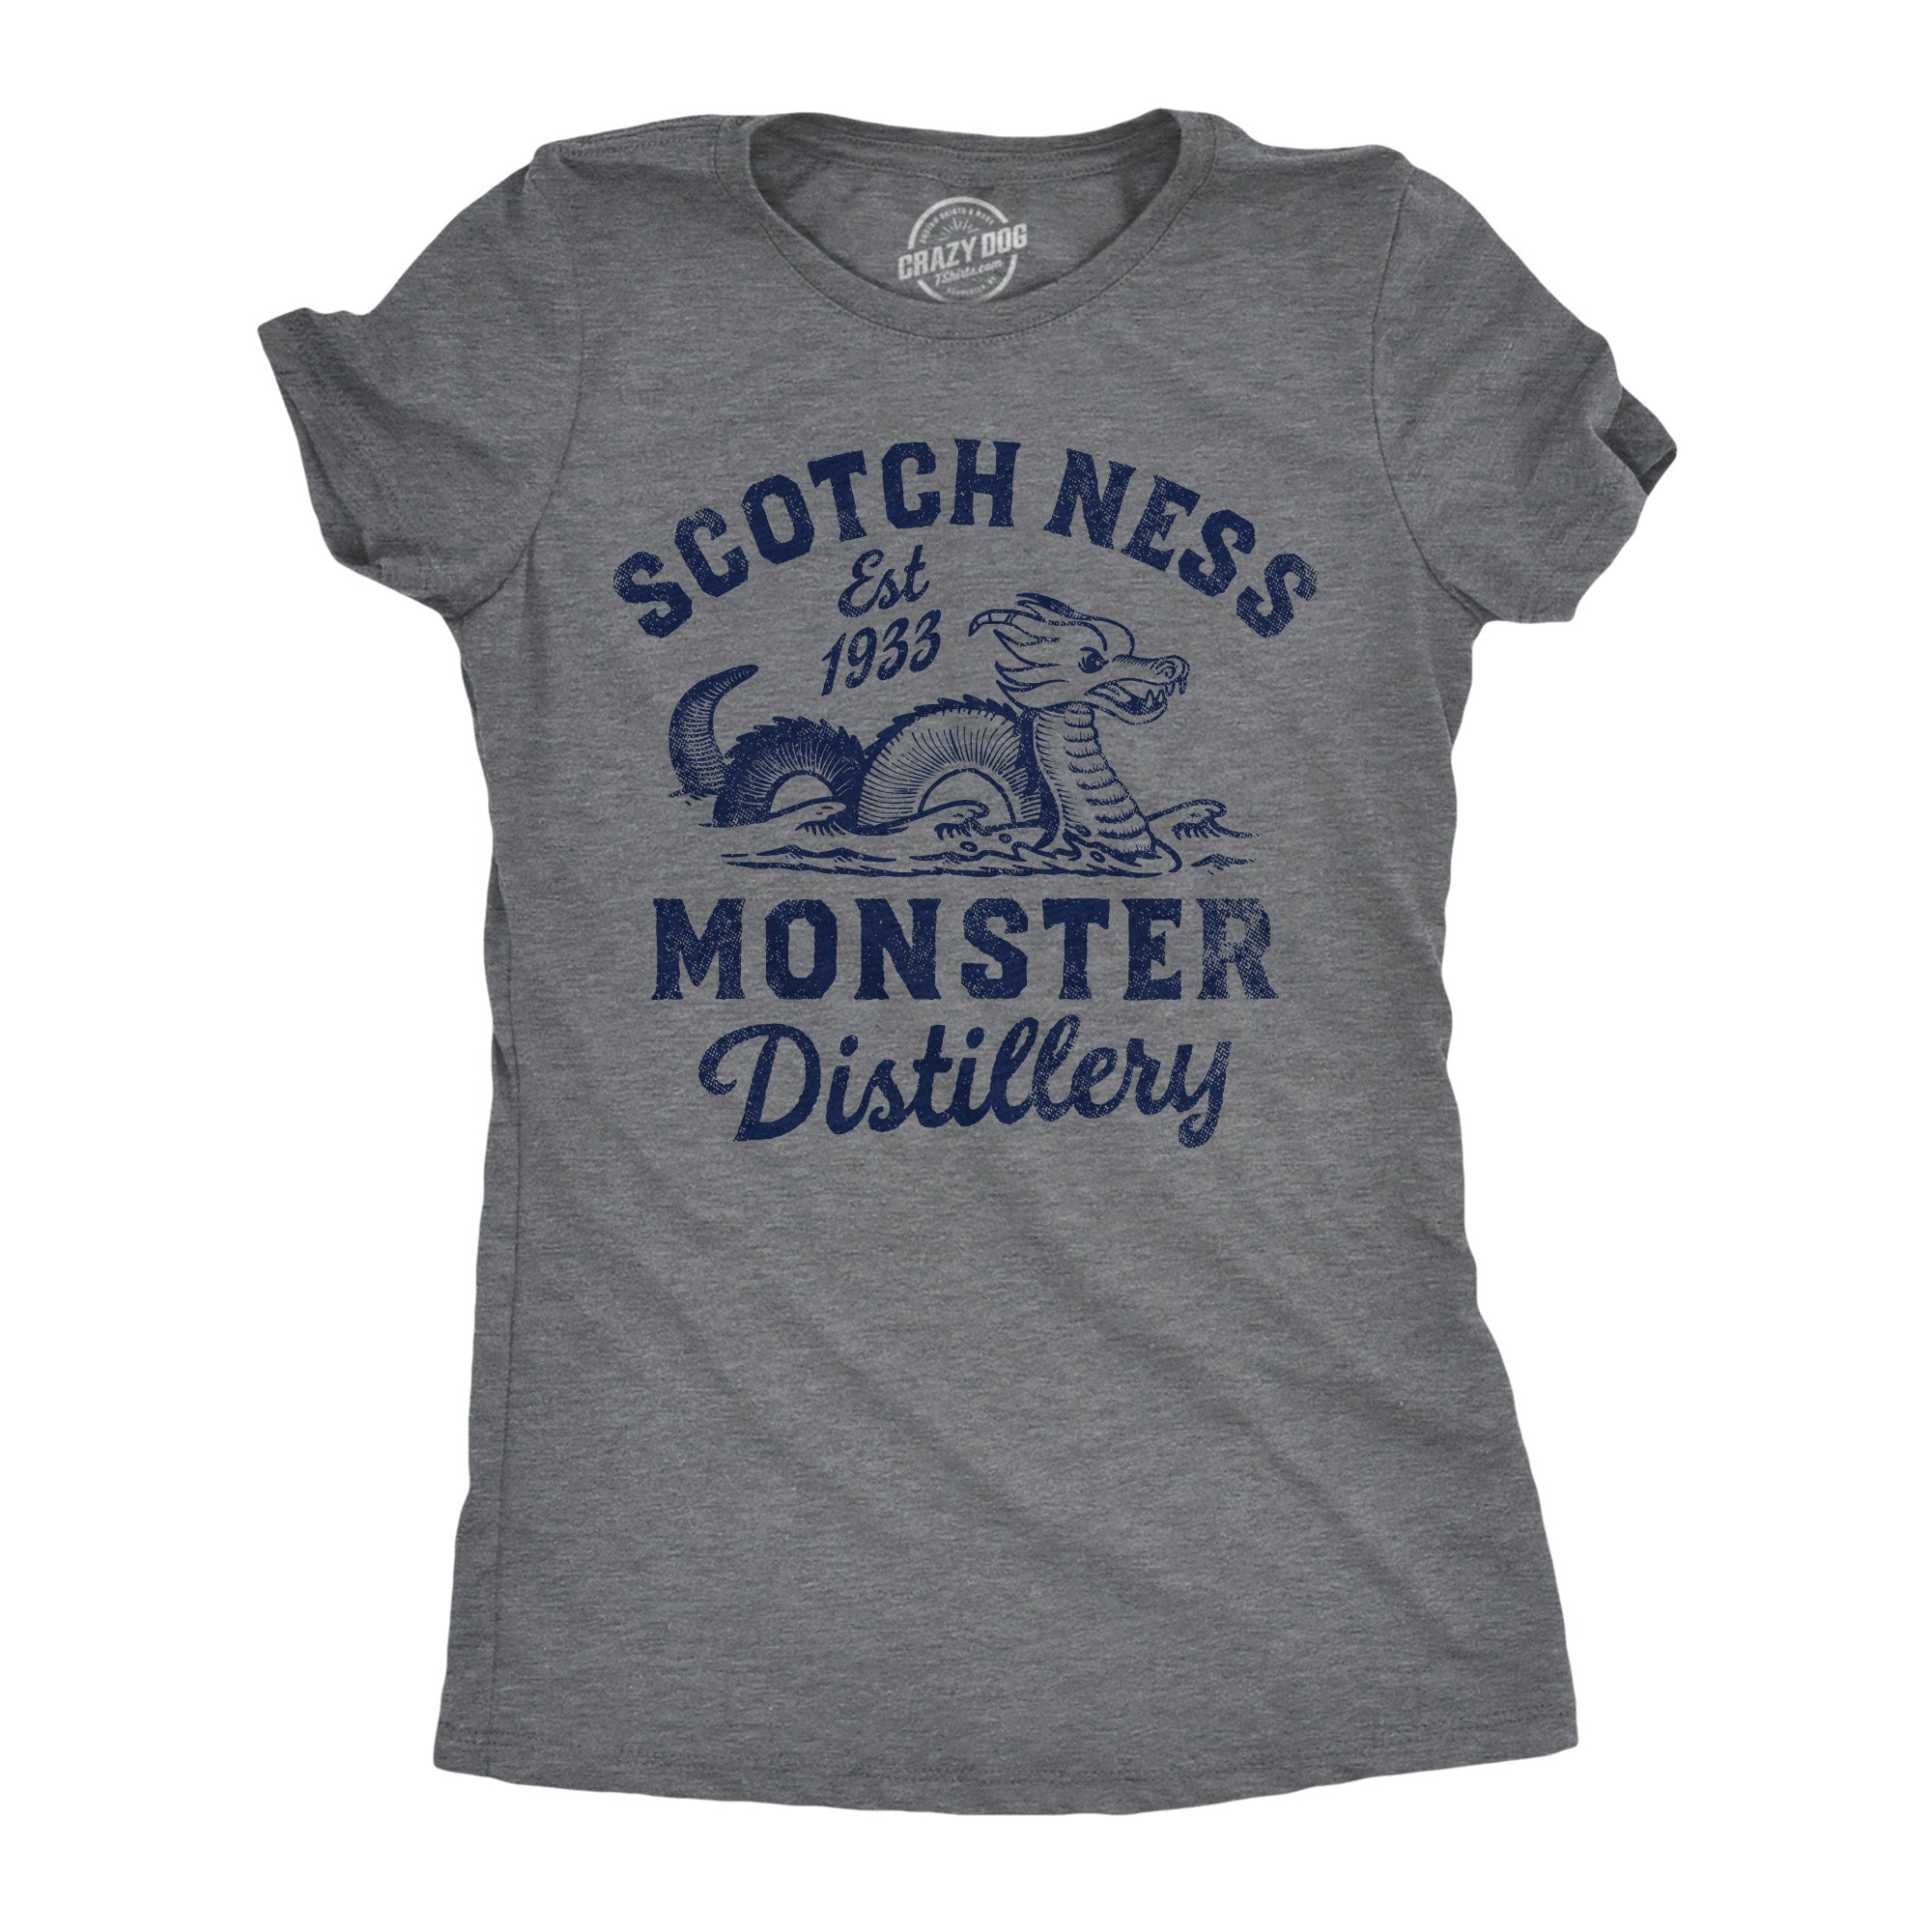 Funny Dark Heather Grey - Scotch Ness Monster Scotch Ness Monster Distillery Womens T Shirt Nerdy Liquor sarcastic Tee